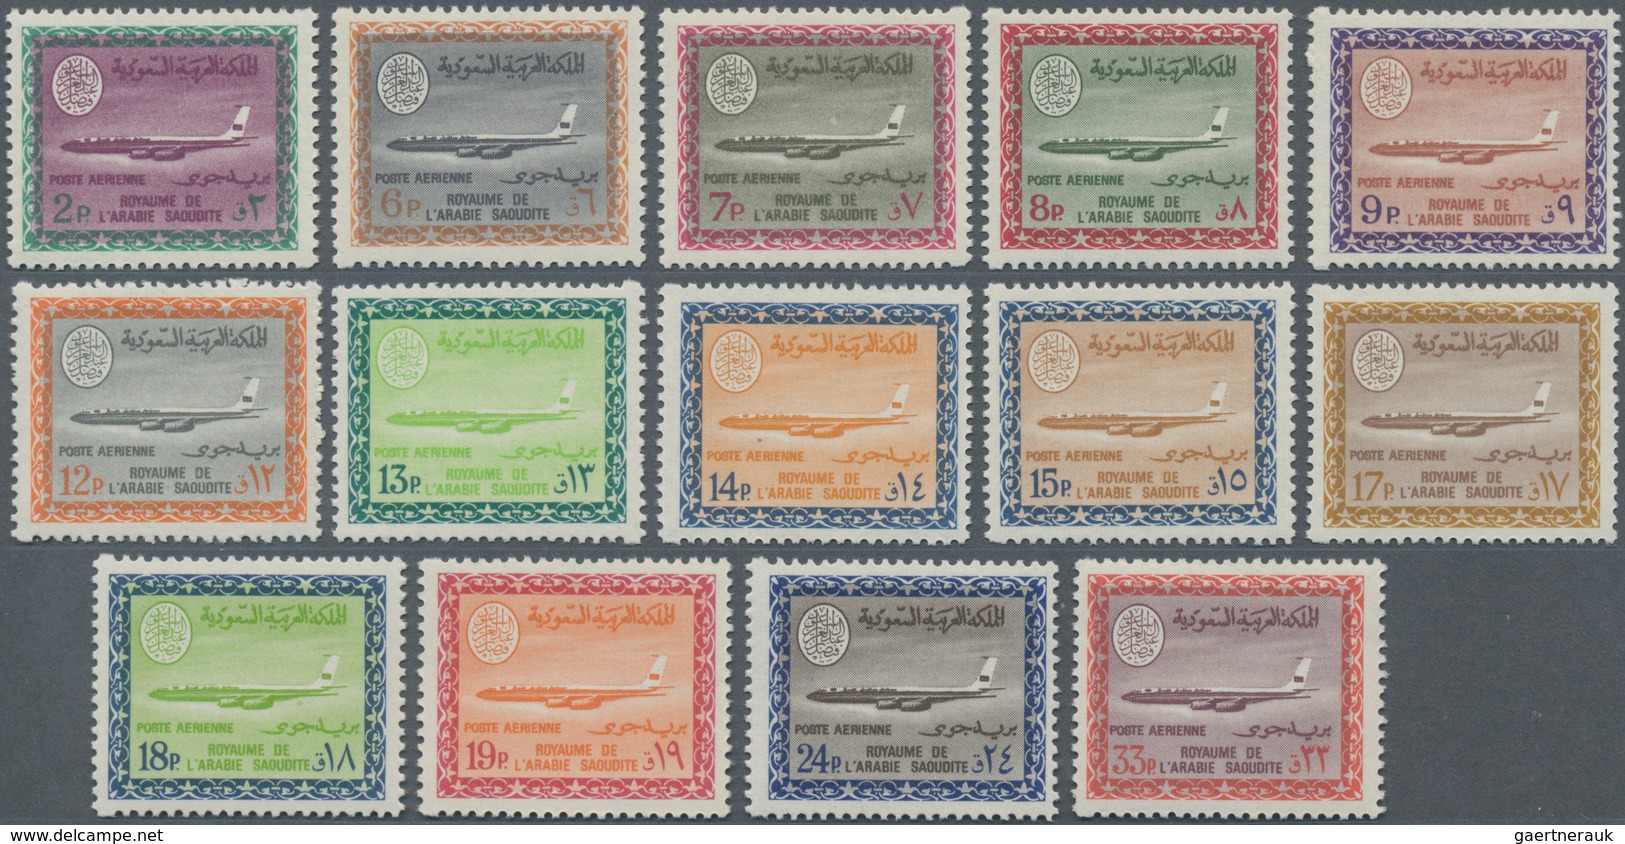 Saudi-Arabien: 1966-75 Air Boing Definitives With King Faisal Cartouche, Short Set Of 14 Stamps Incl - Saudi Arabia